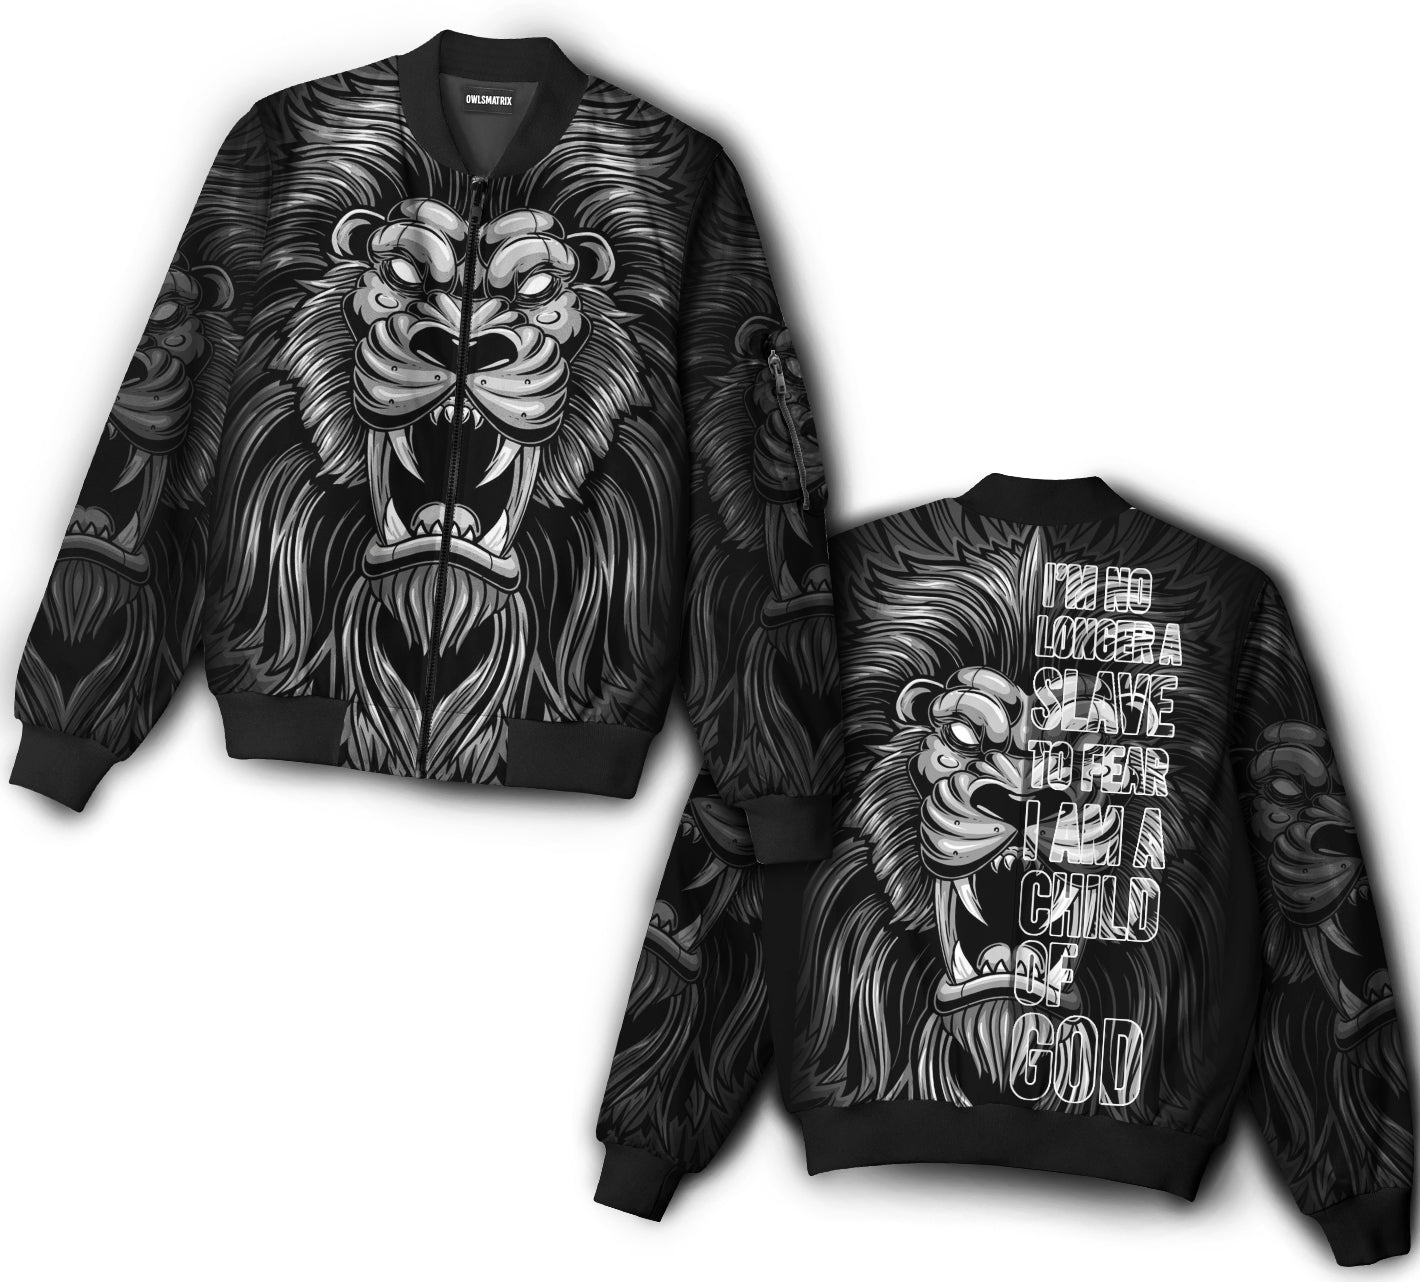 Lion child of god black style - Bomber jacket - BOMJ04TNH060921 - Owls Matrix LTD